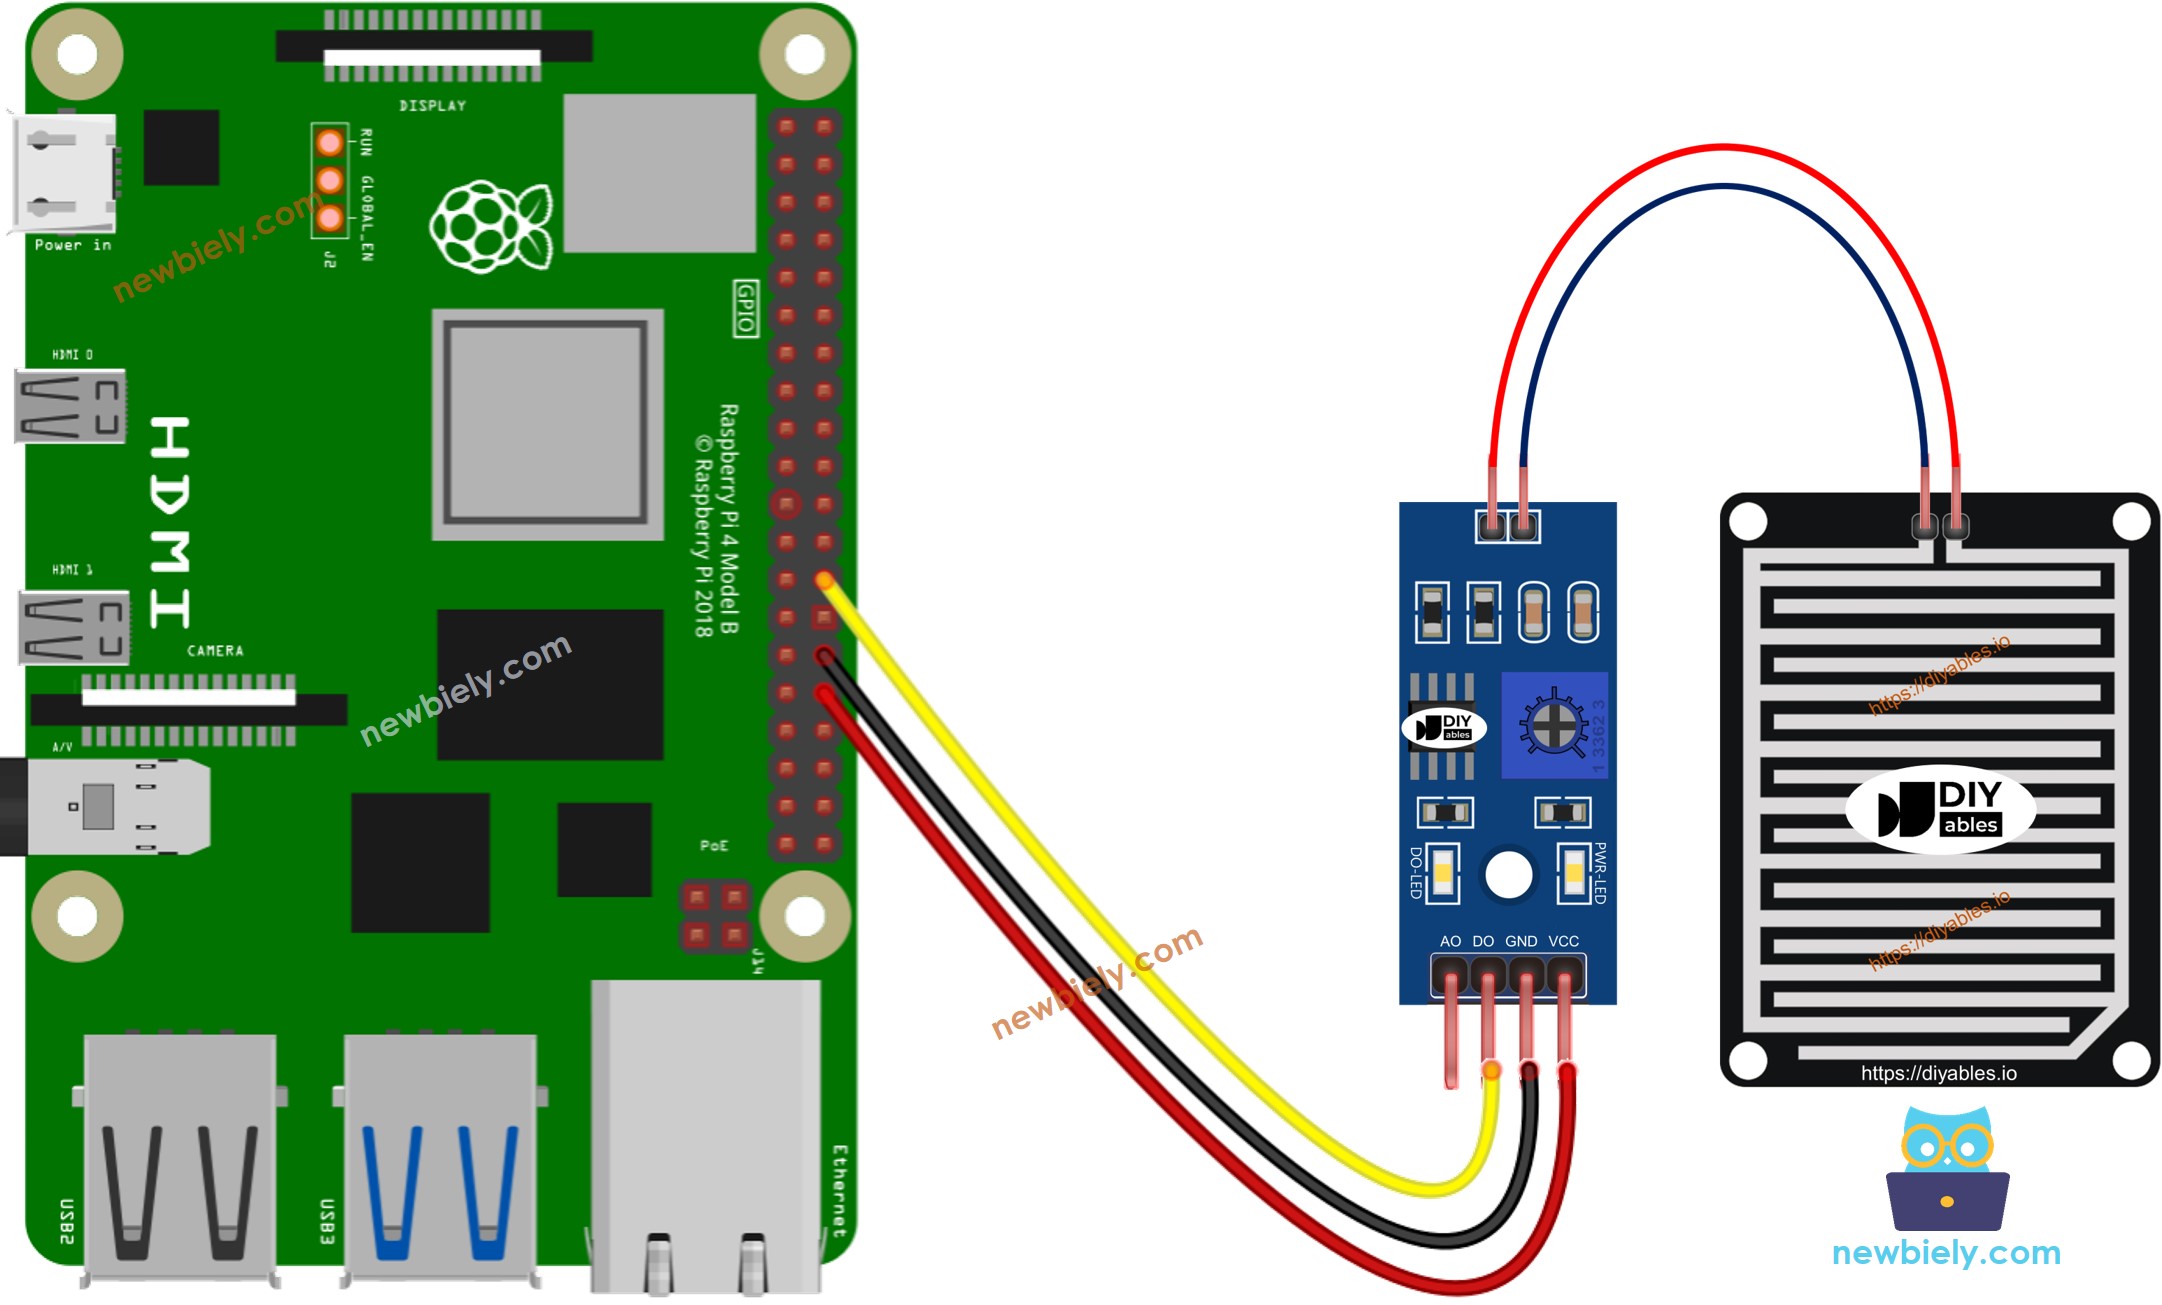 The wiring diagram between Raspberry Pi and rain sensor